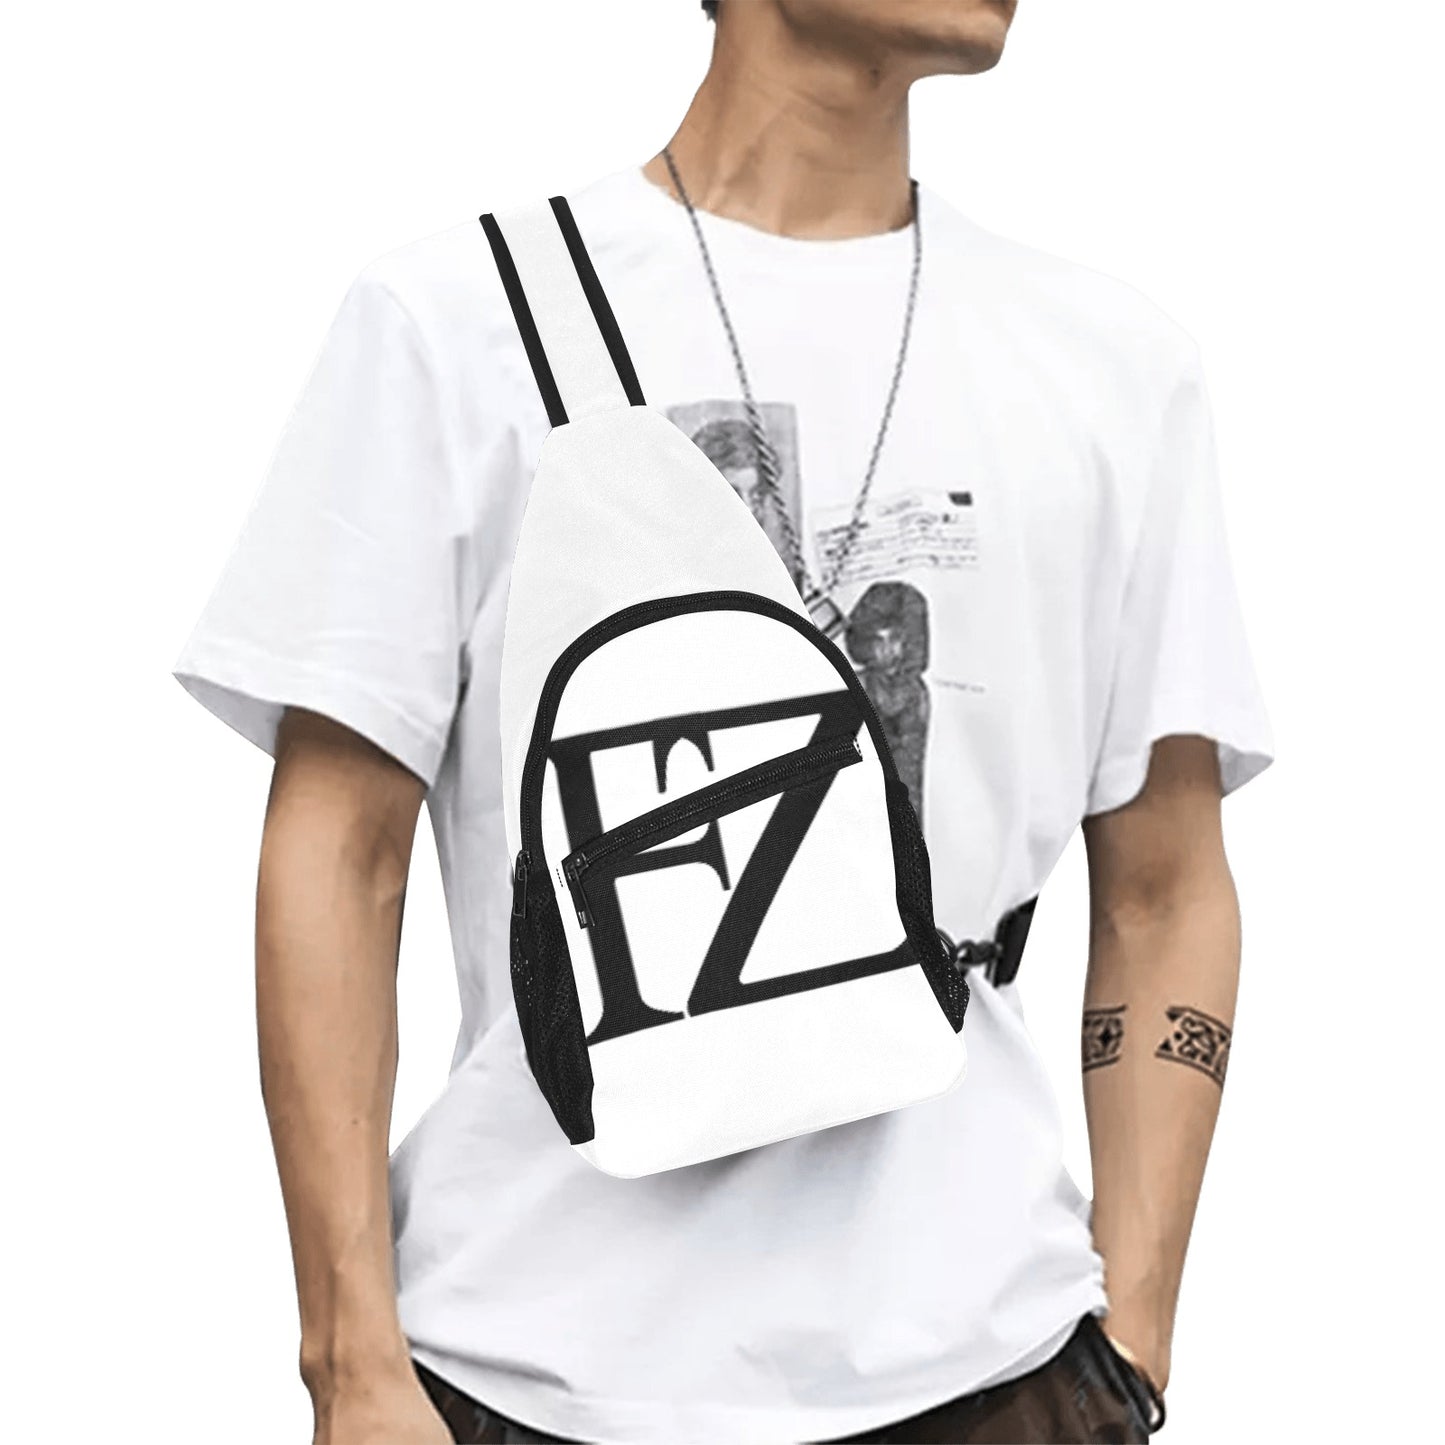 fz men's chest bag too one size / fz men's chest bag too-white all over print chest bag(model1719)